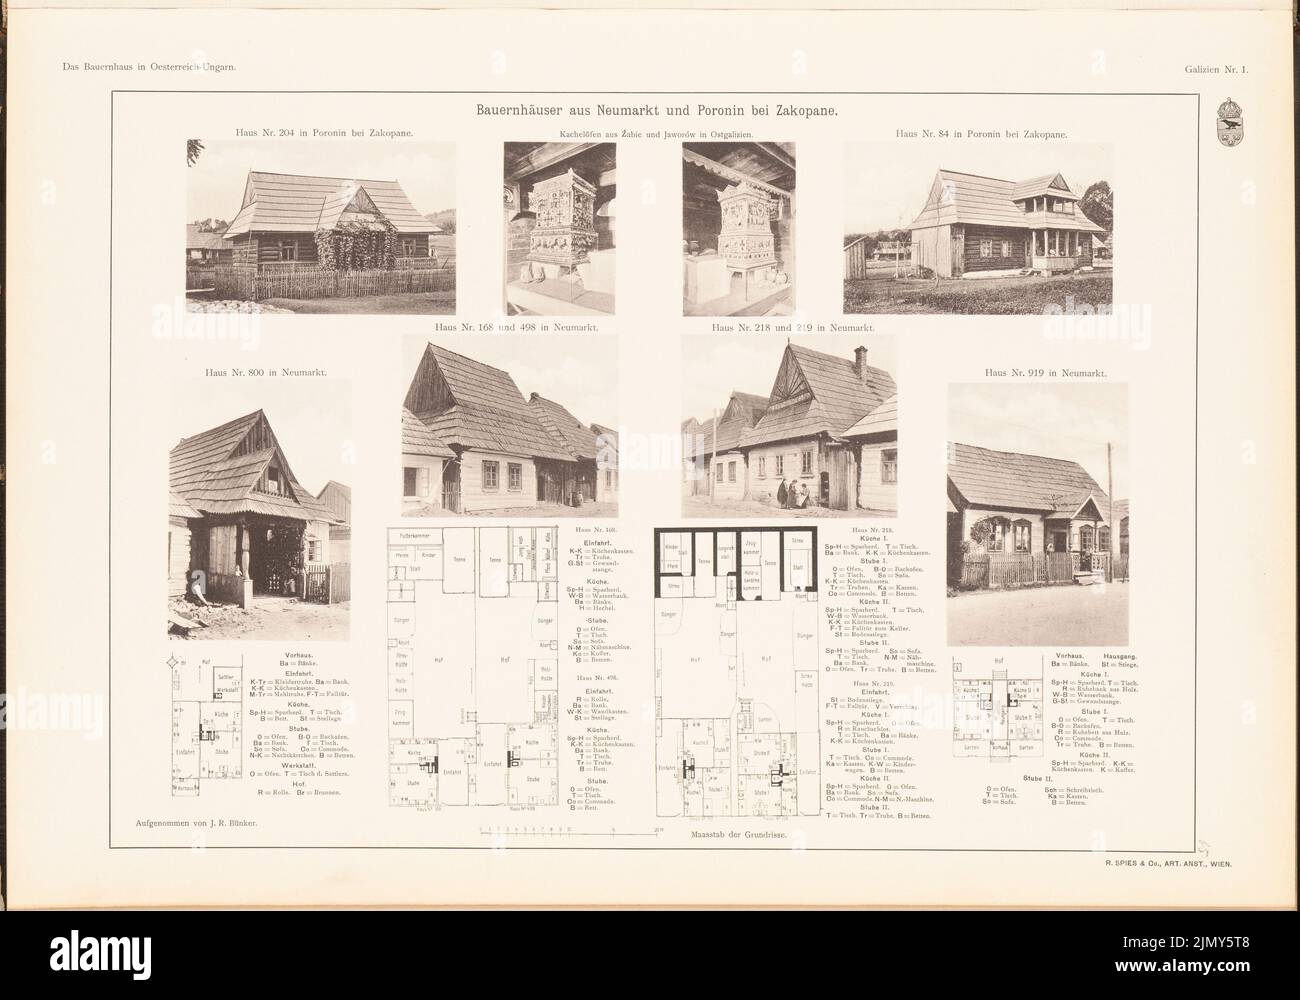 Bünker J. R., farmhouse, Neumarkt, Poronin. (From: The farmhouse in Austria-Hungary, ed. Print on paper, 33.3 x 47.6 cm (including scan edges) Stock Photo